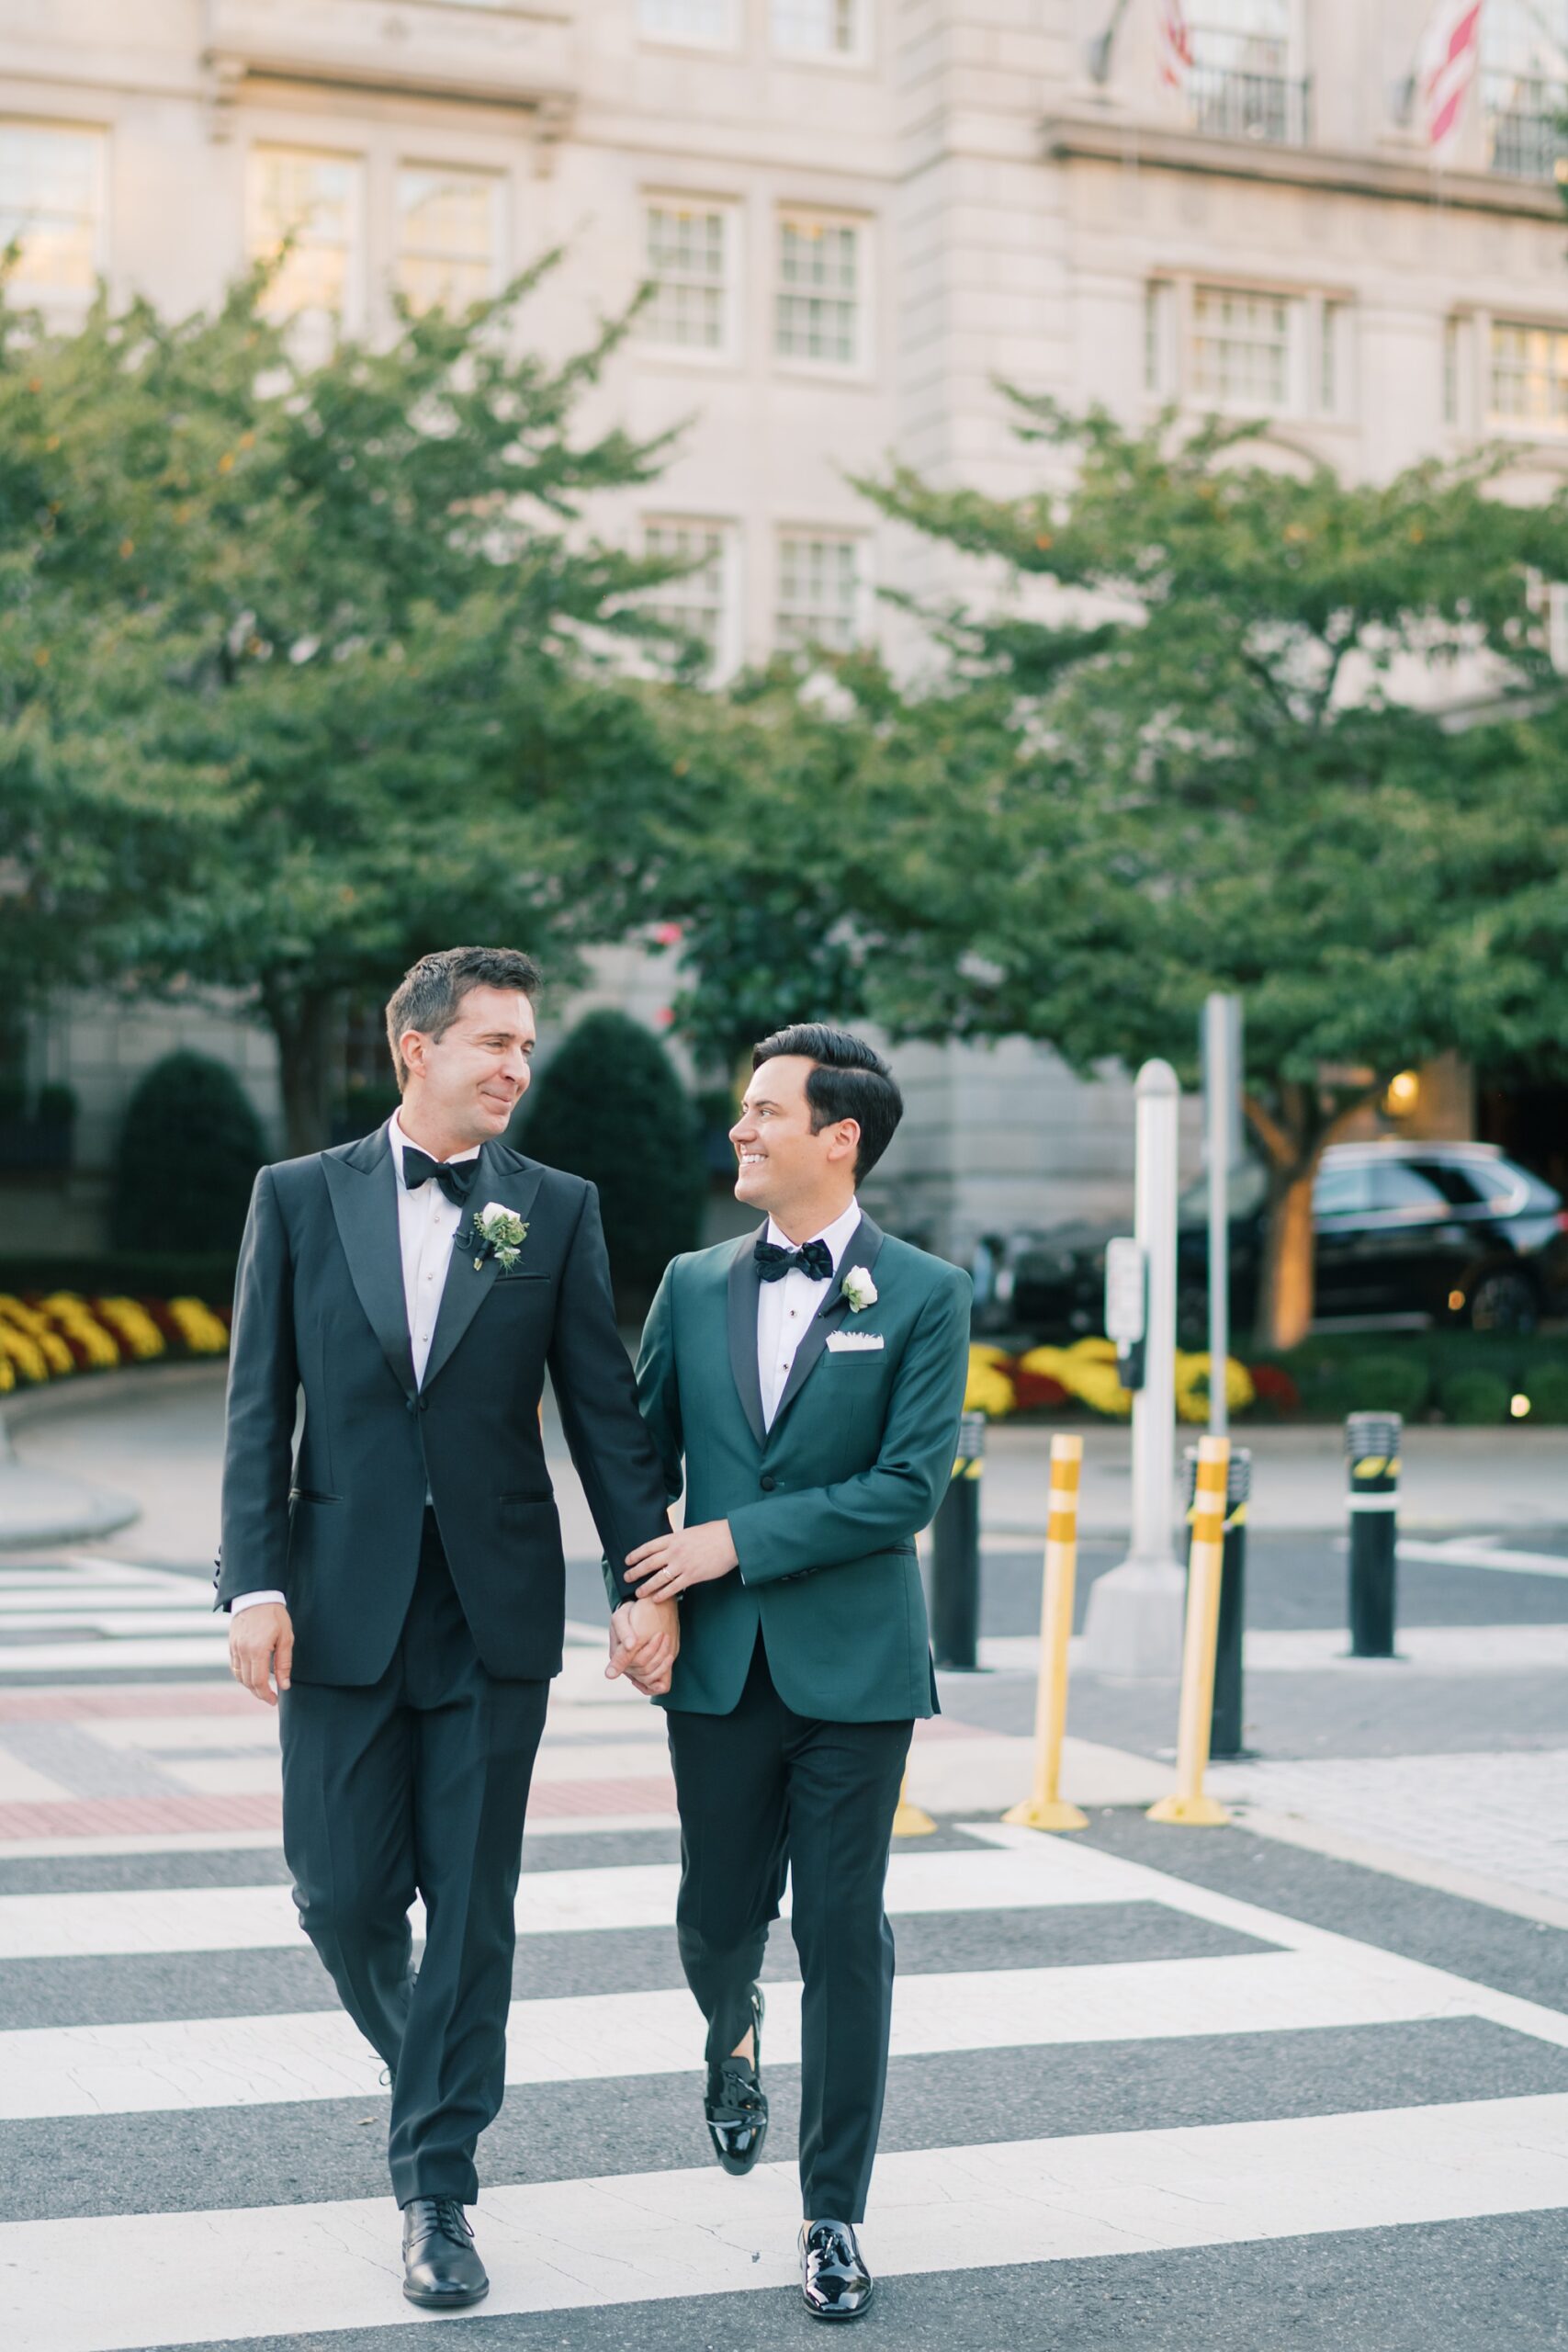 husbands hold hands walking on street in Washington DC